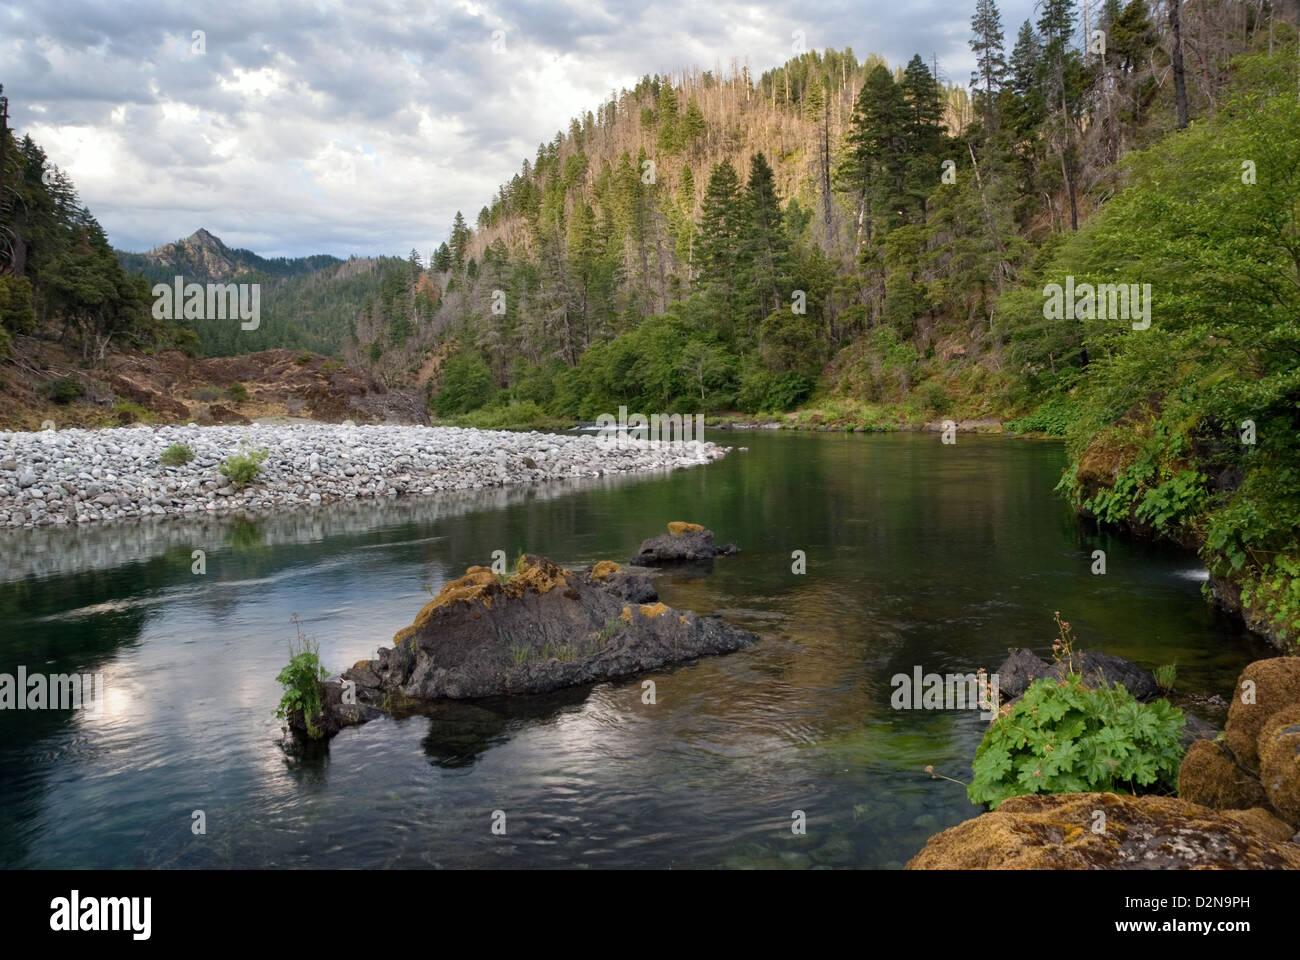 Den Illinois River in den Siskiyou Mountains von Oregon. Stockfoto